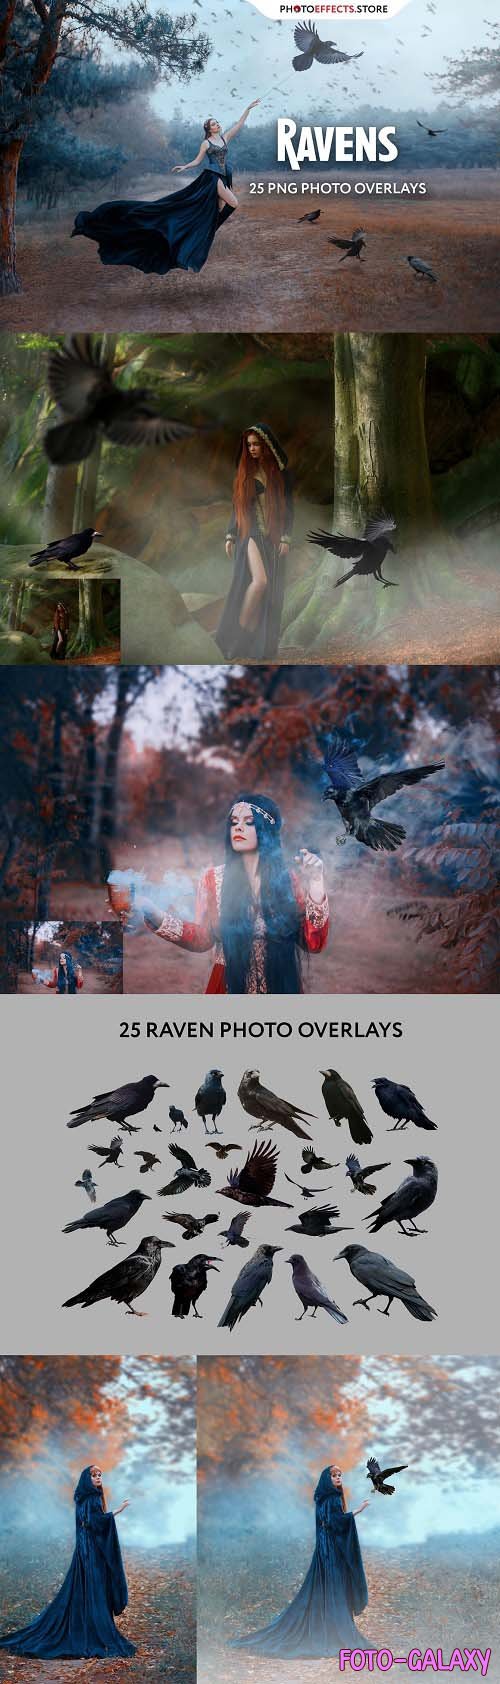 25 Ravens Photo Overlays - 6616712